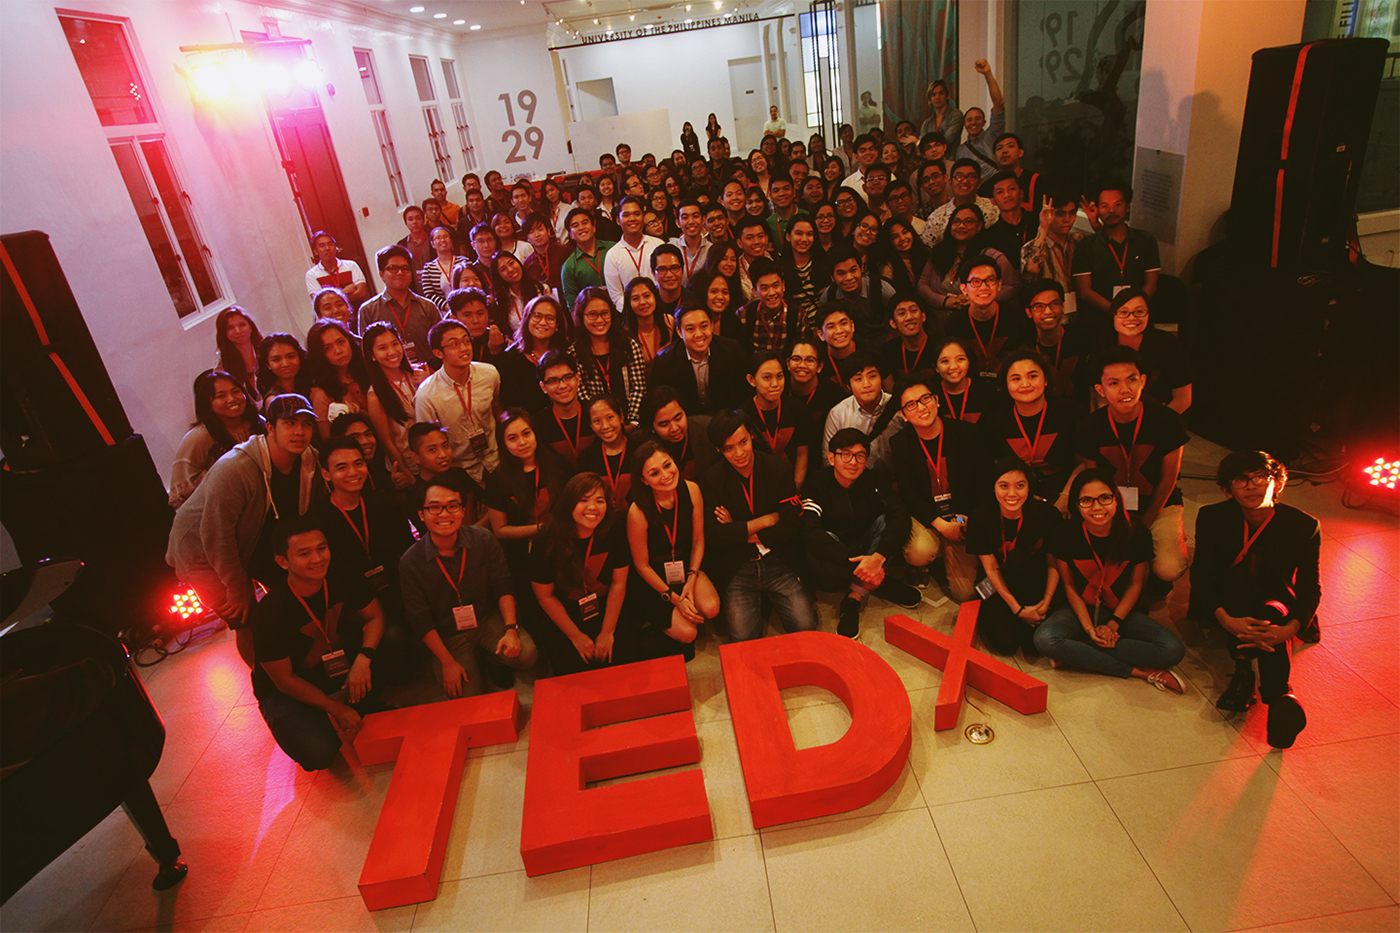 Adobe Portfolio TEDx TEDxTaftAve Taft Ave Manila philippines martin diegor